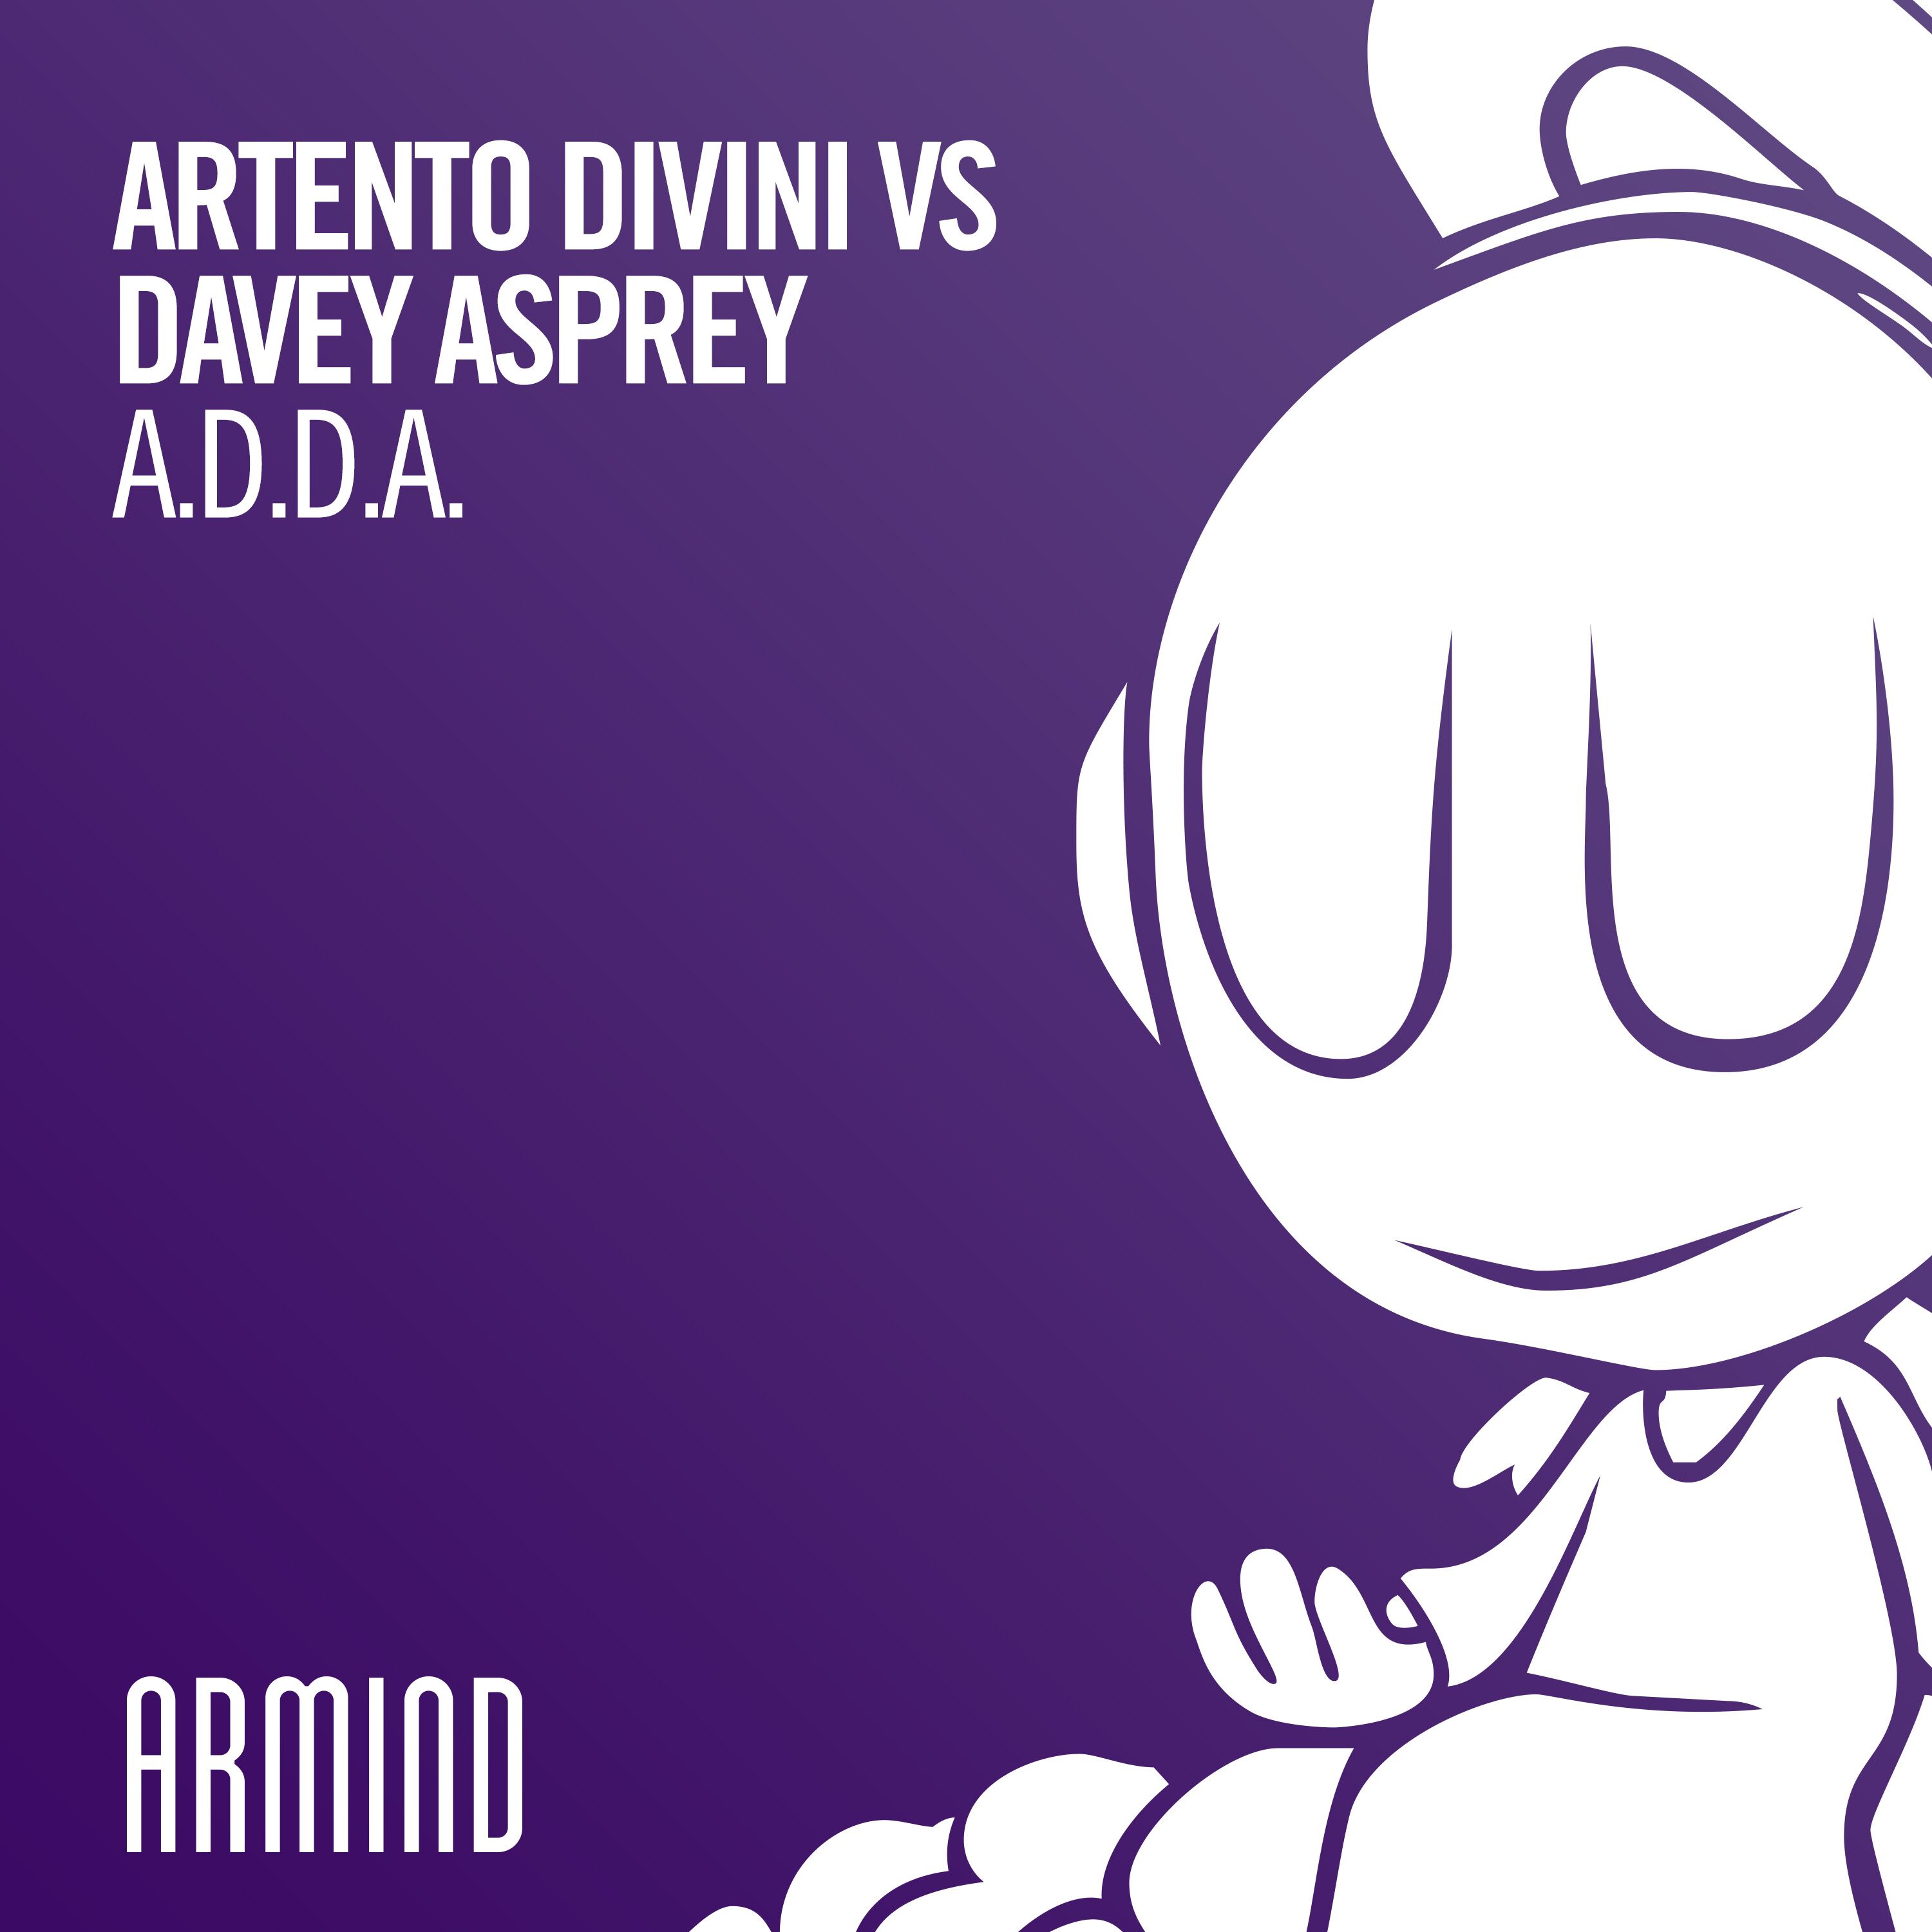 Artento Divini vs. Davey Asprey presents A.D.D.A. on Armind / Armada Music